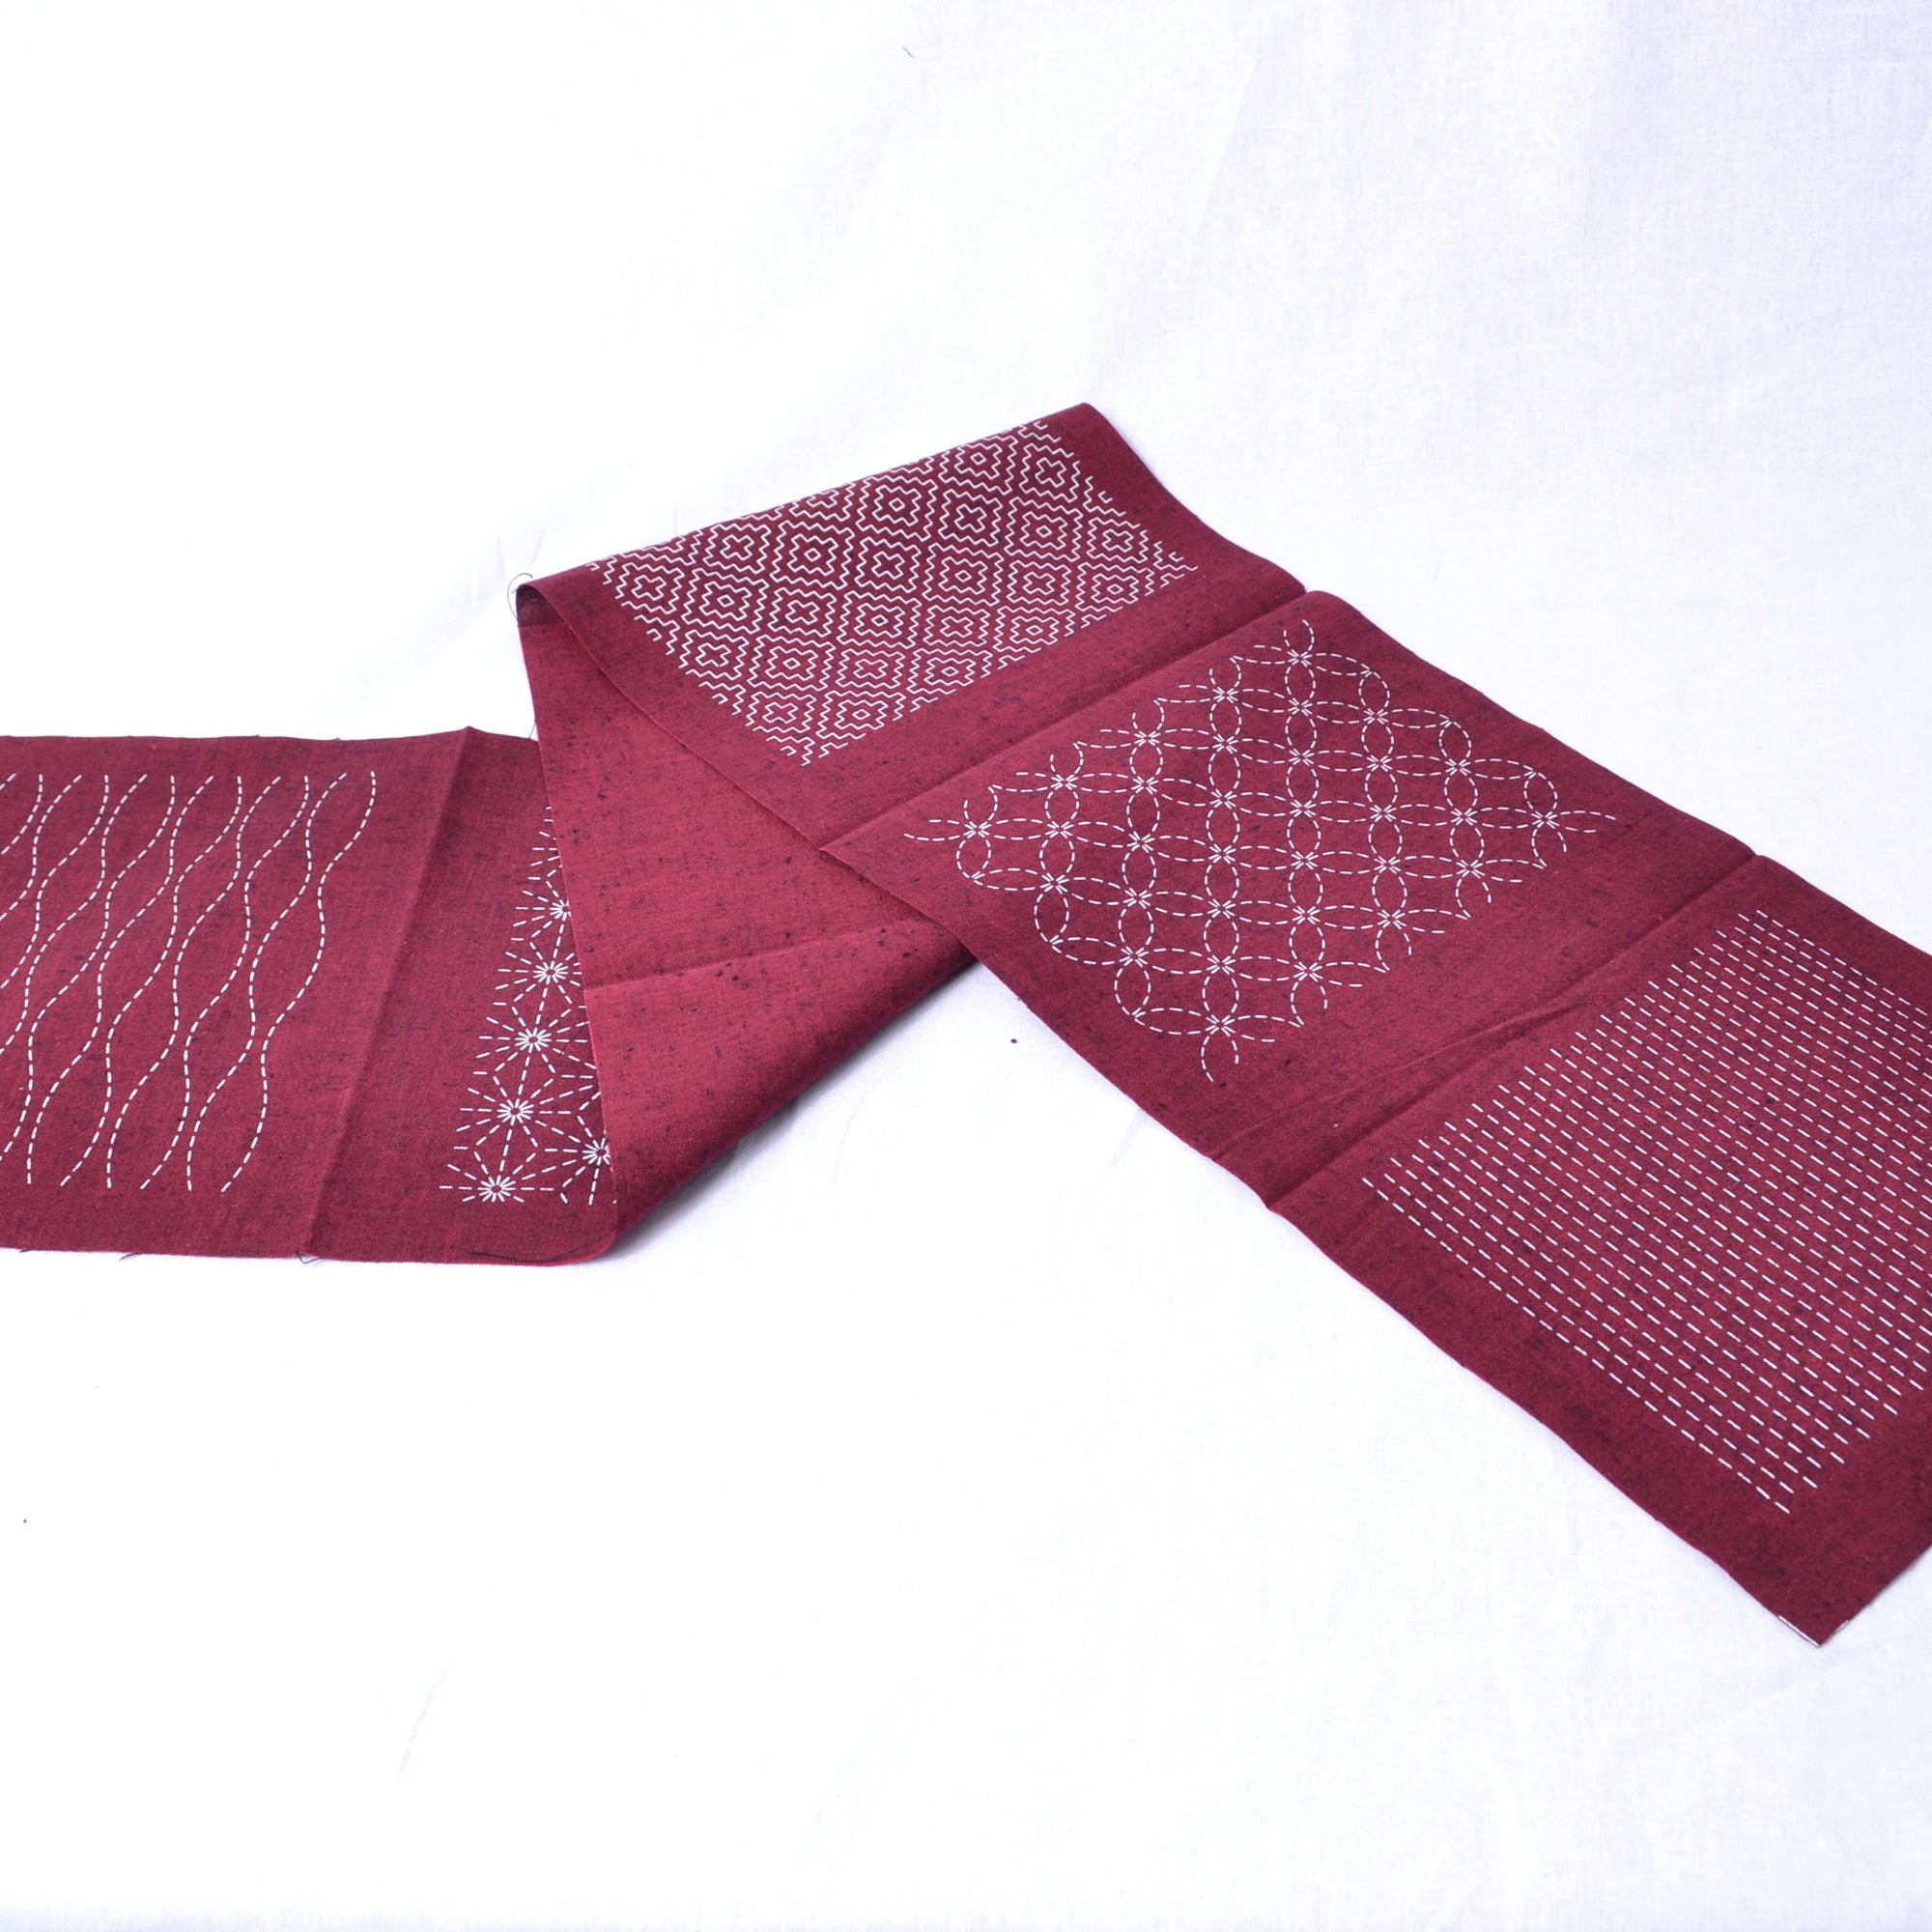 Red tsumugi cotton fabric with sashiko pre printed designs